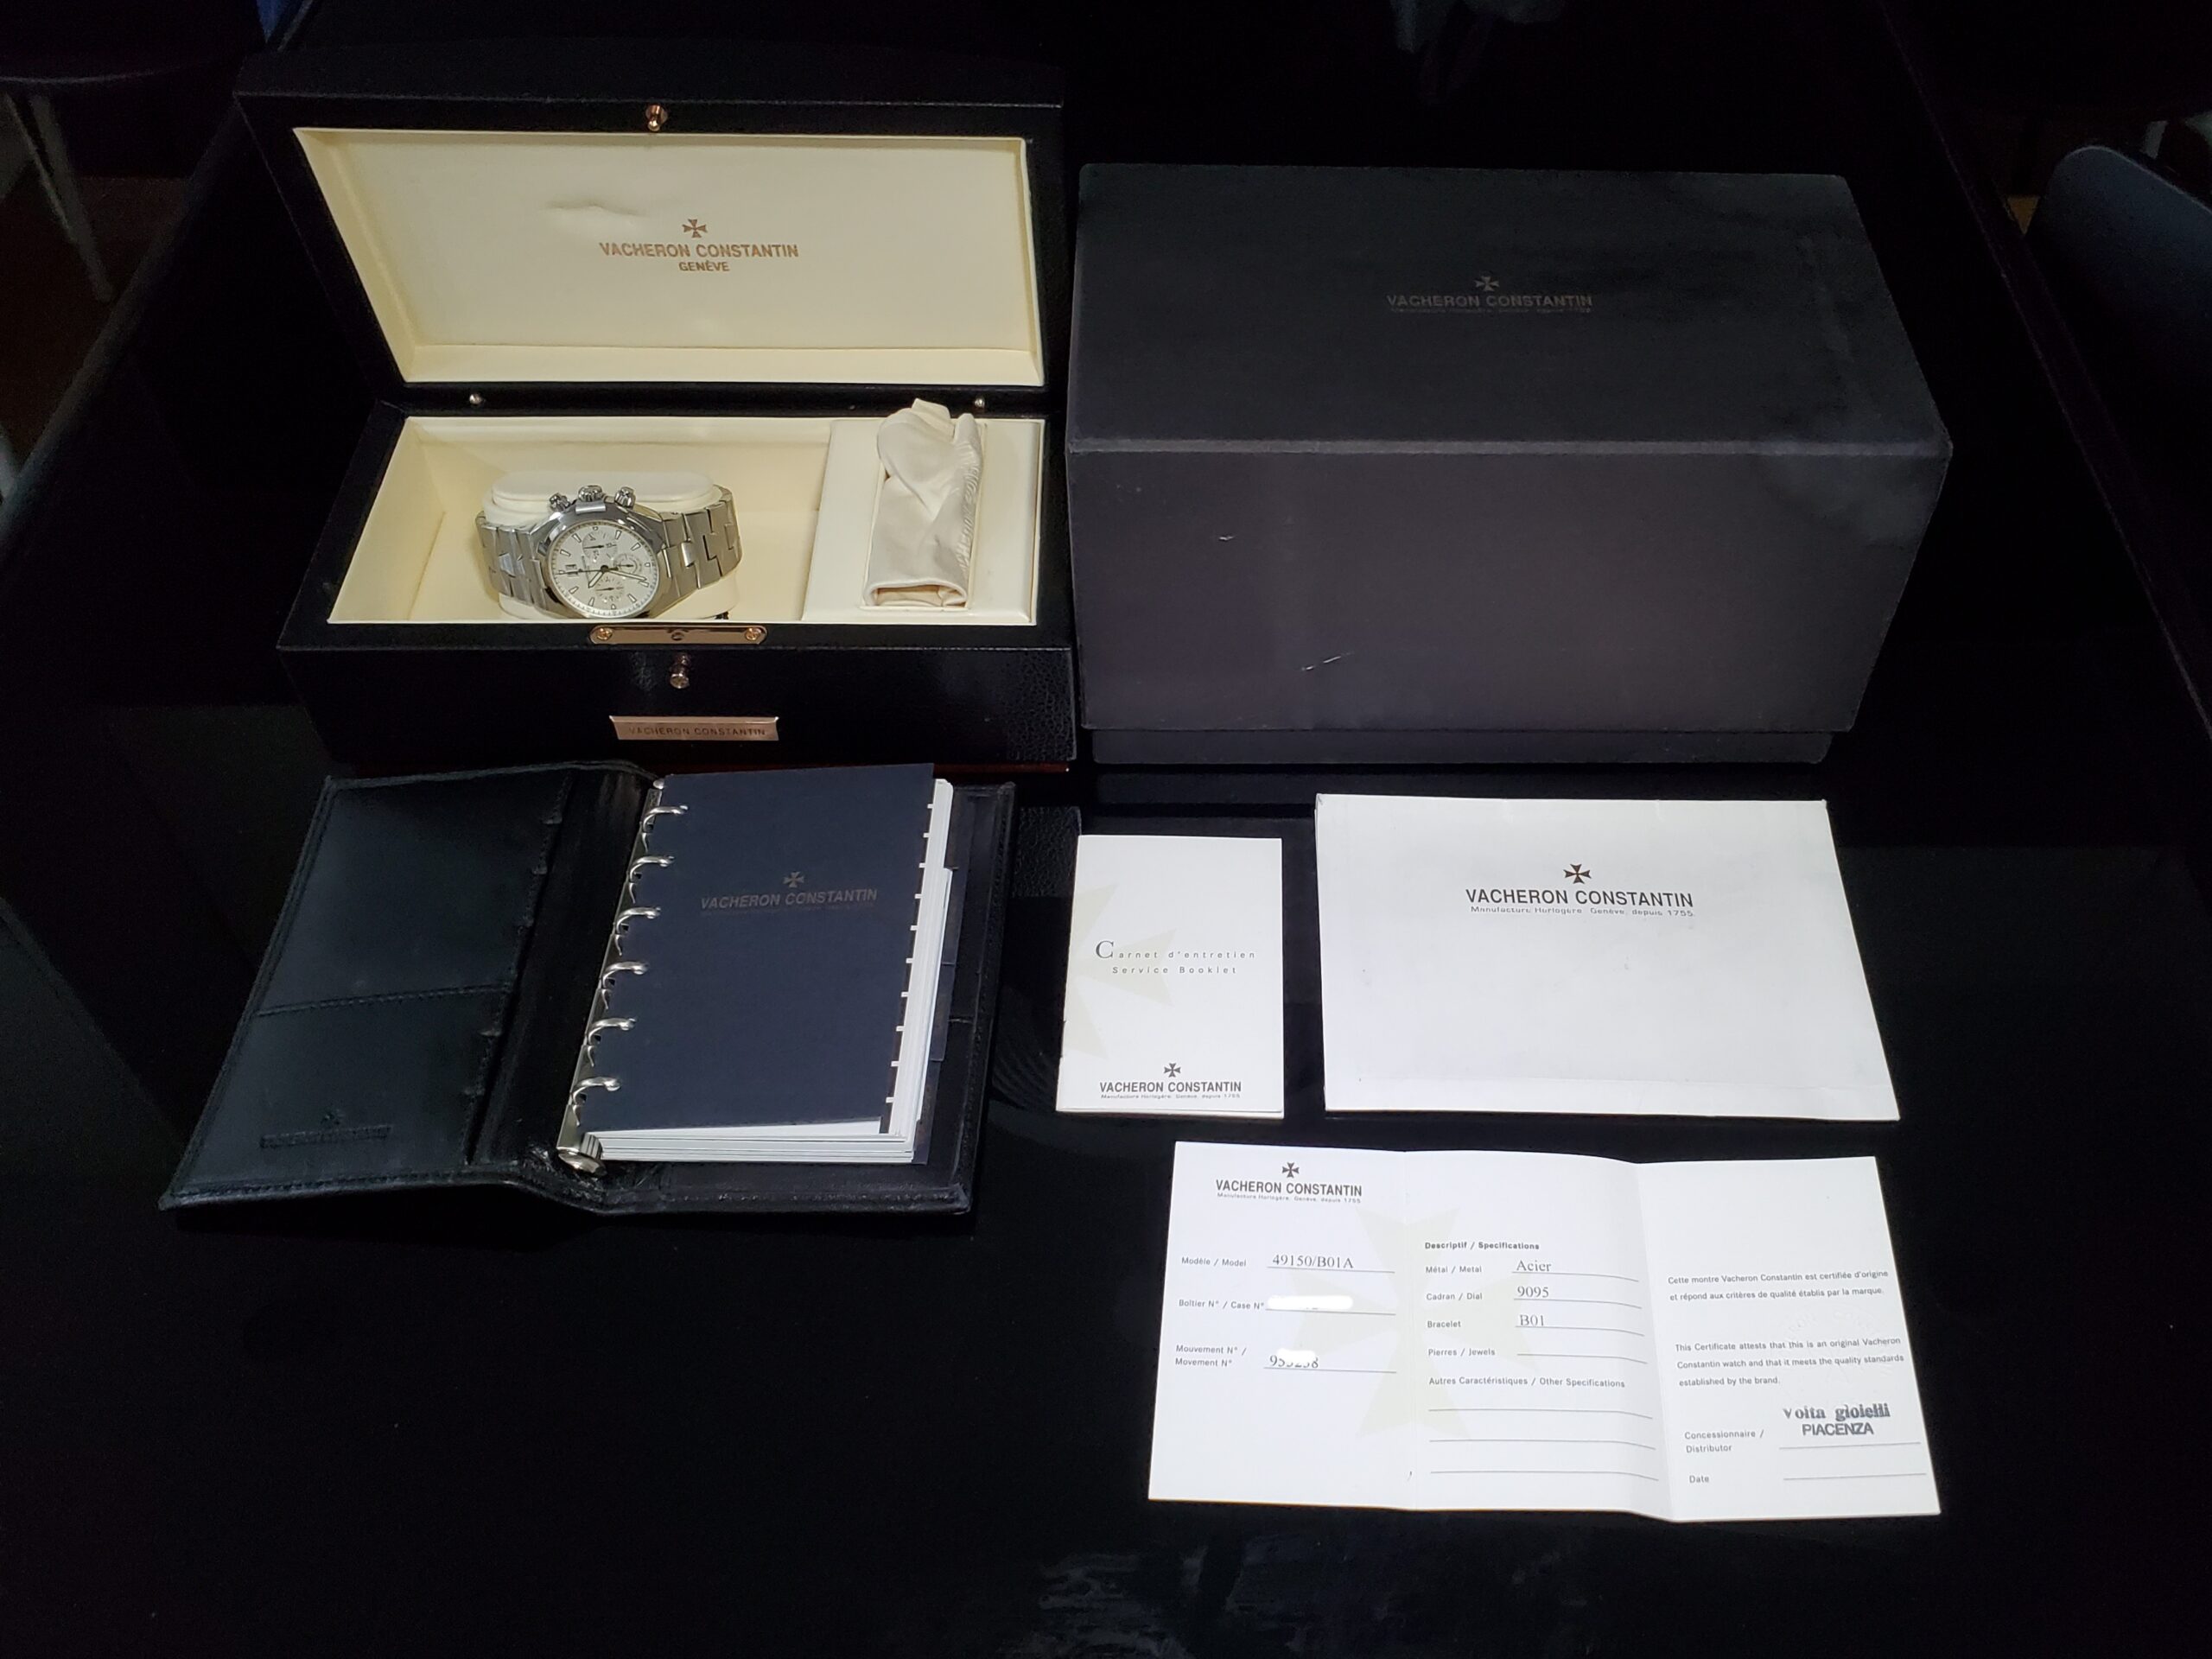 Vacheron Constantin Overseas Chronograph Complete Set